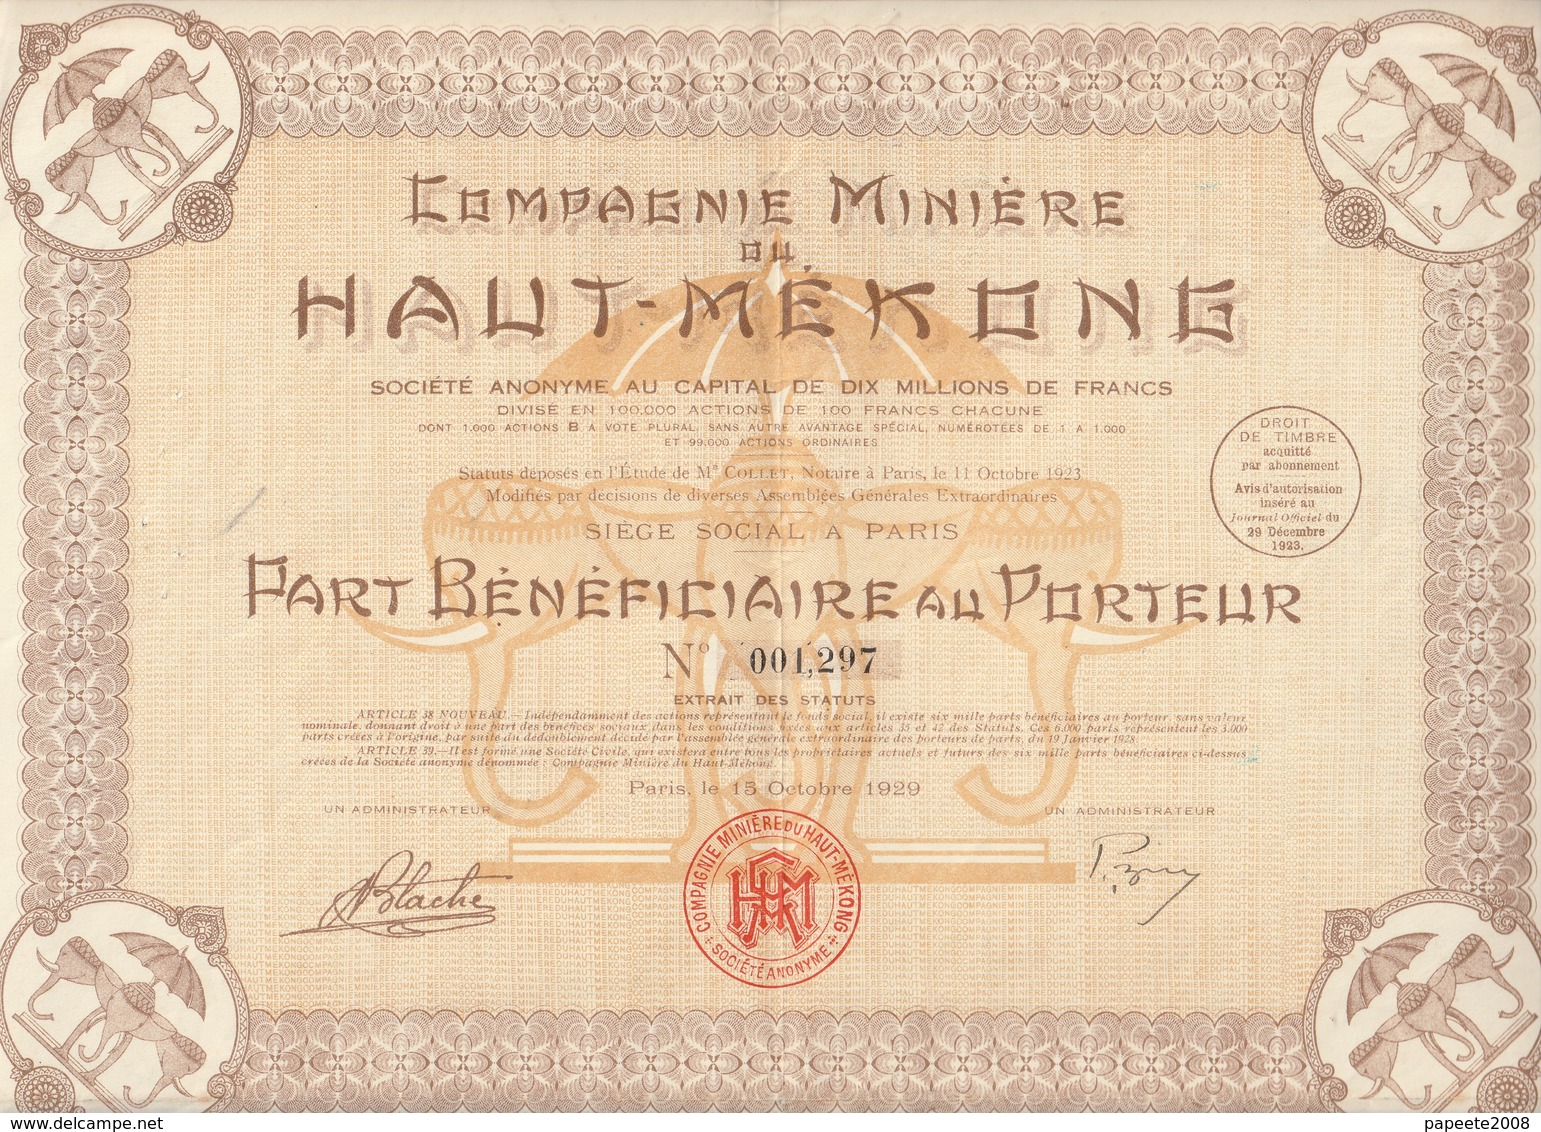 Indochine - Cie Minière Du Haut Mékong - PB / 1929 - Azië